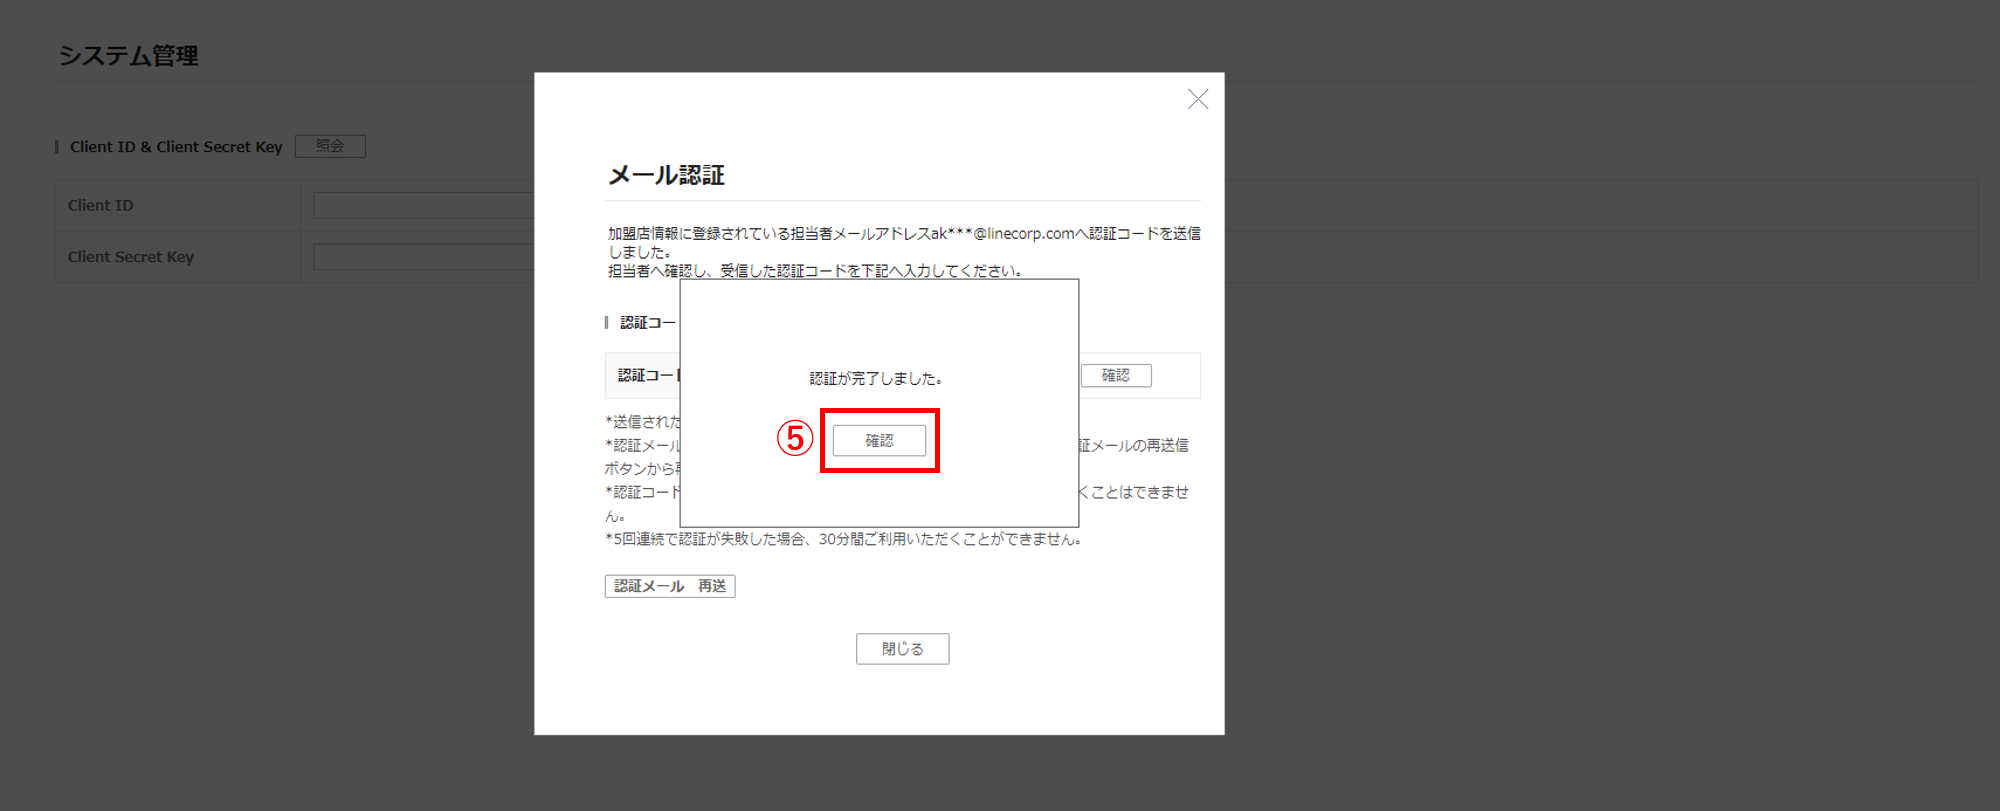 client ID_Key照会_認証完了確認画面_修正済みver.2.png